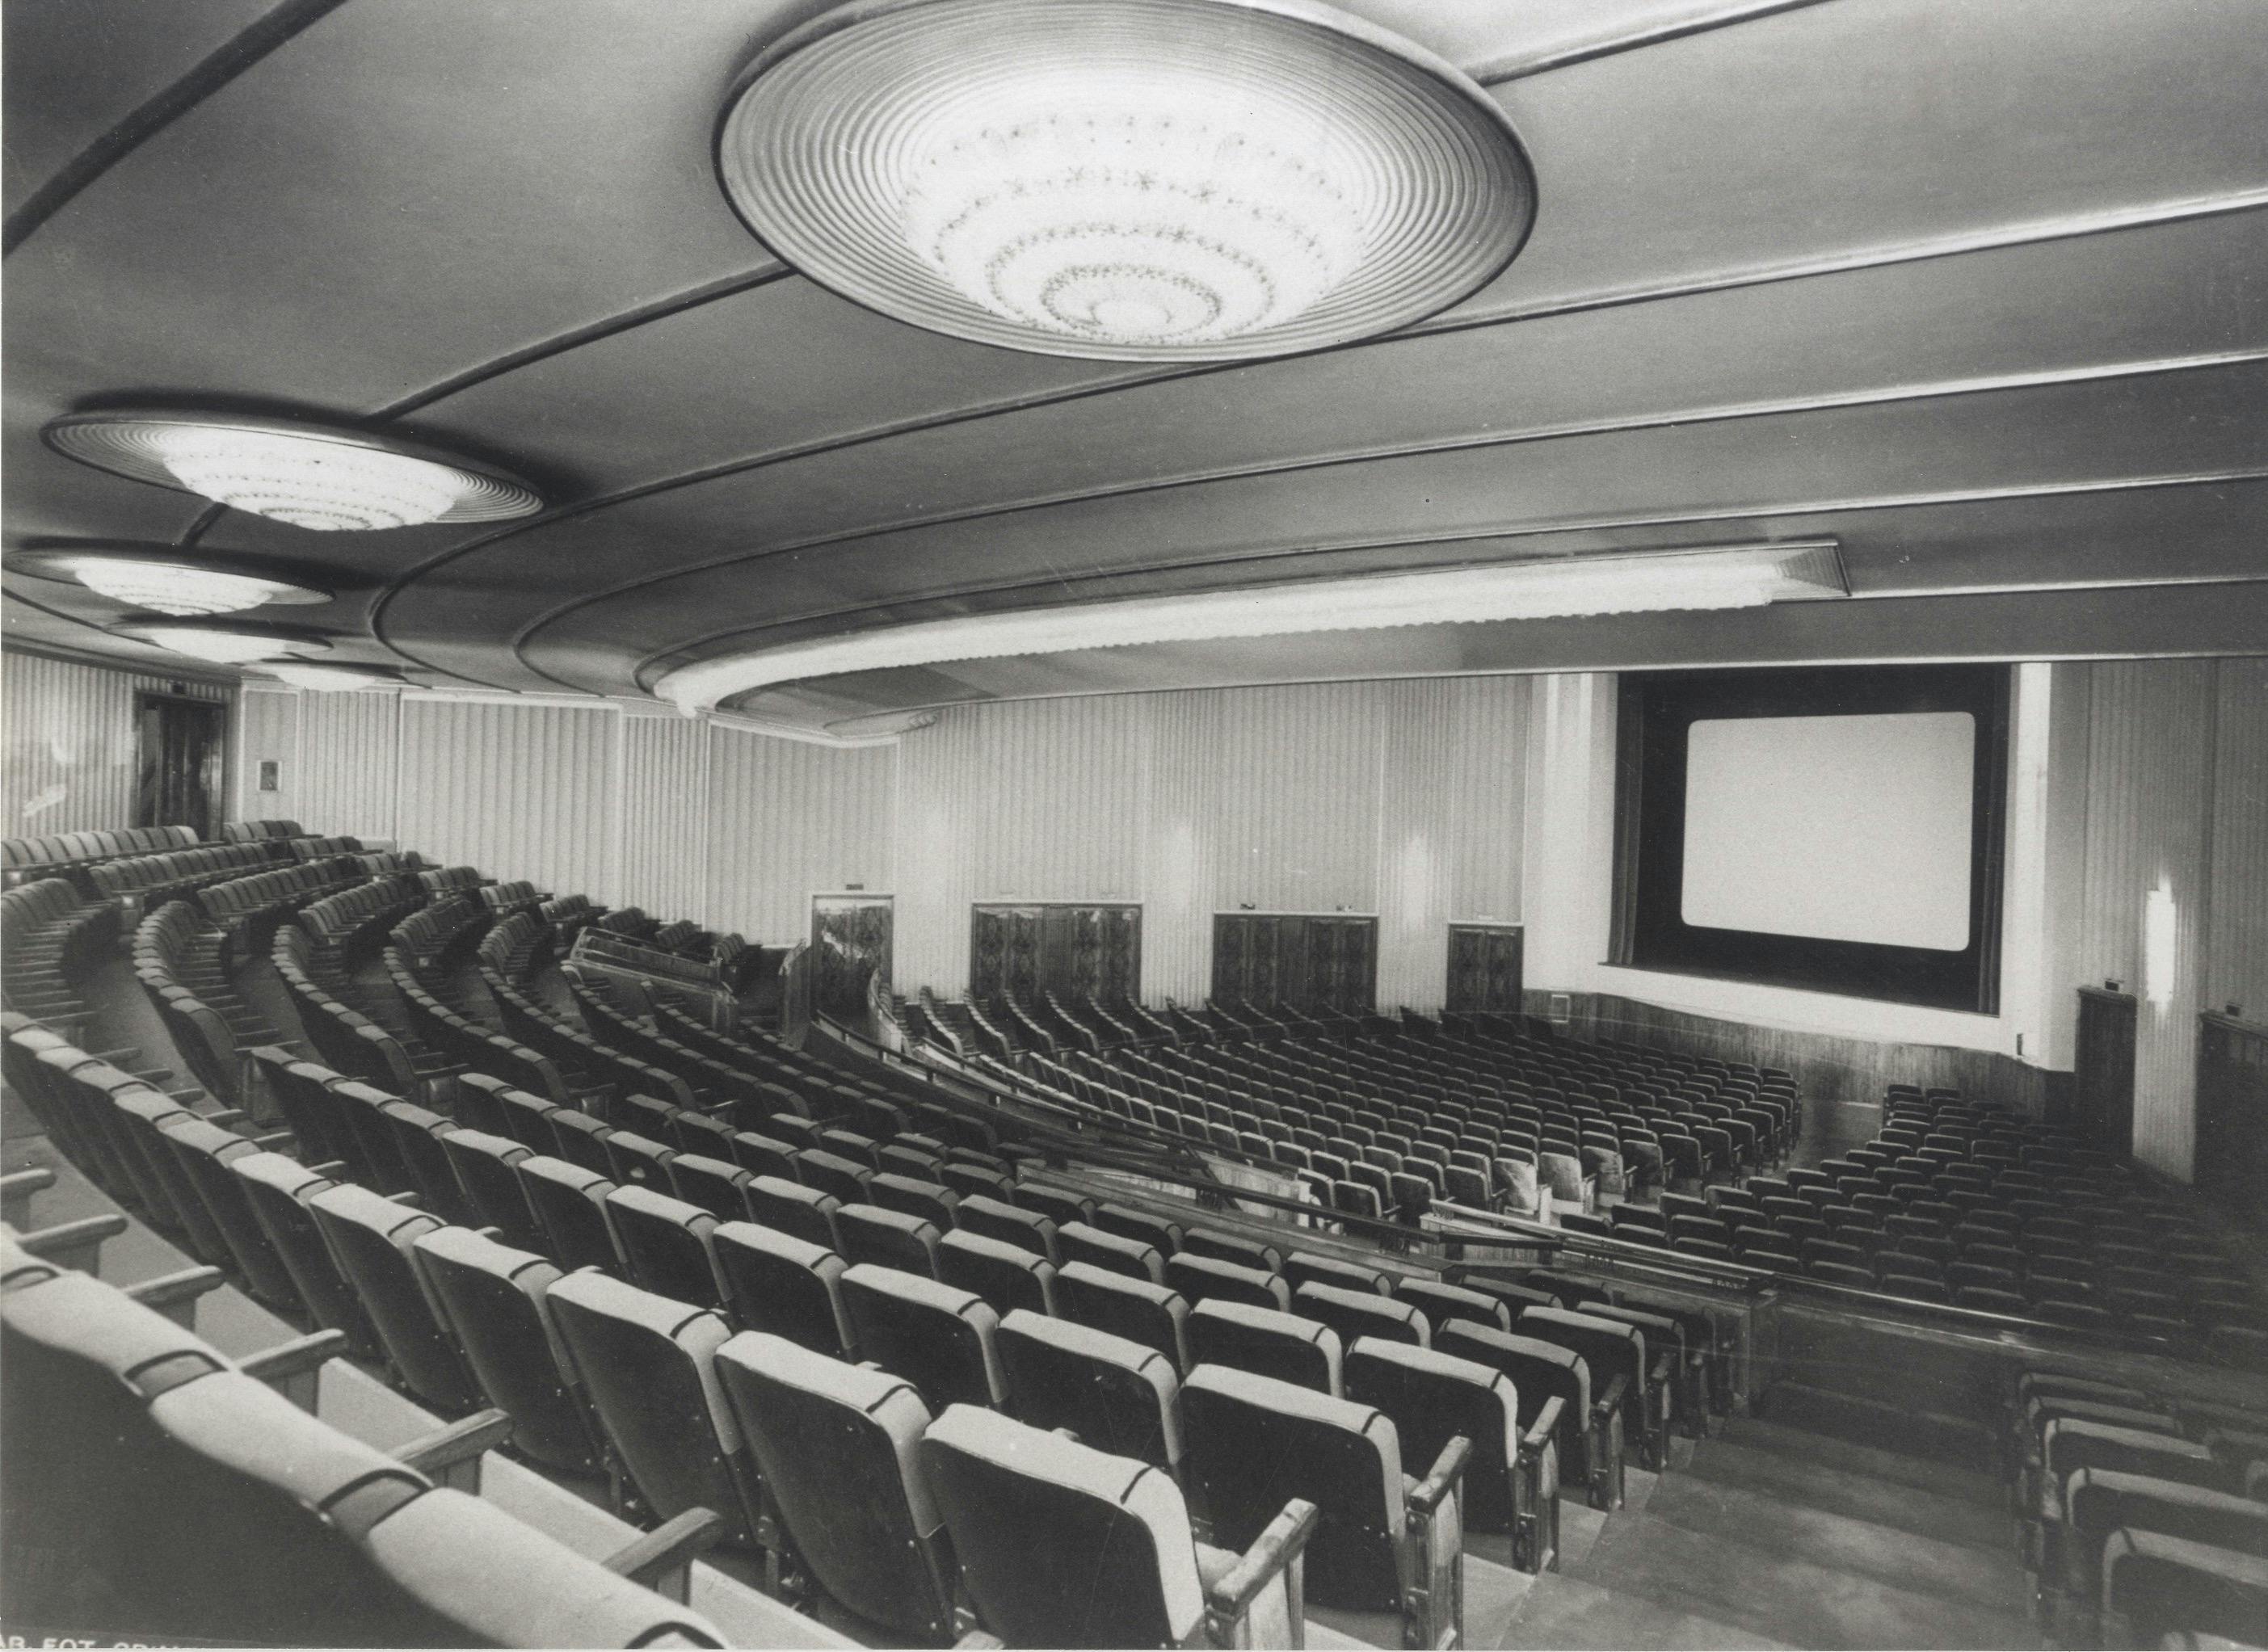 Cinema Metro Astra in Corso Vittorio Emanuele, screening room, 1941, project by architect Alessandro Rimini